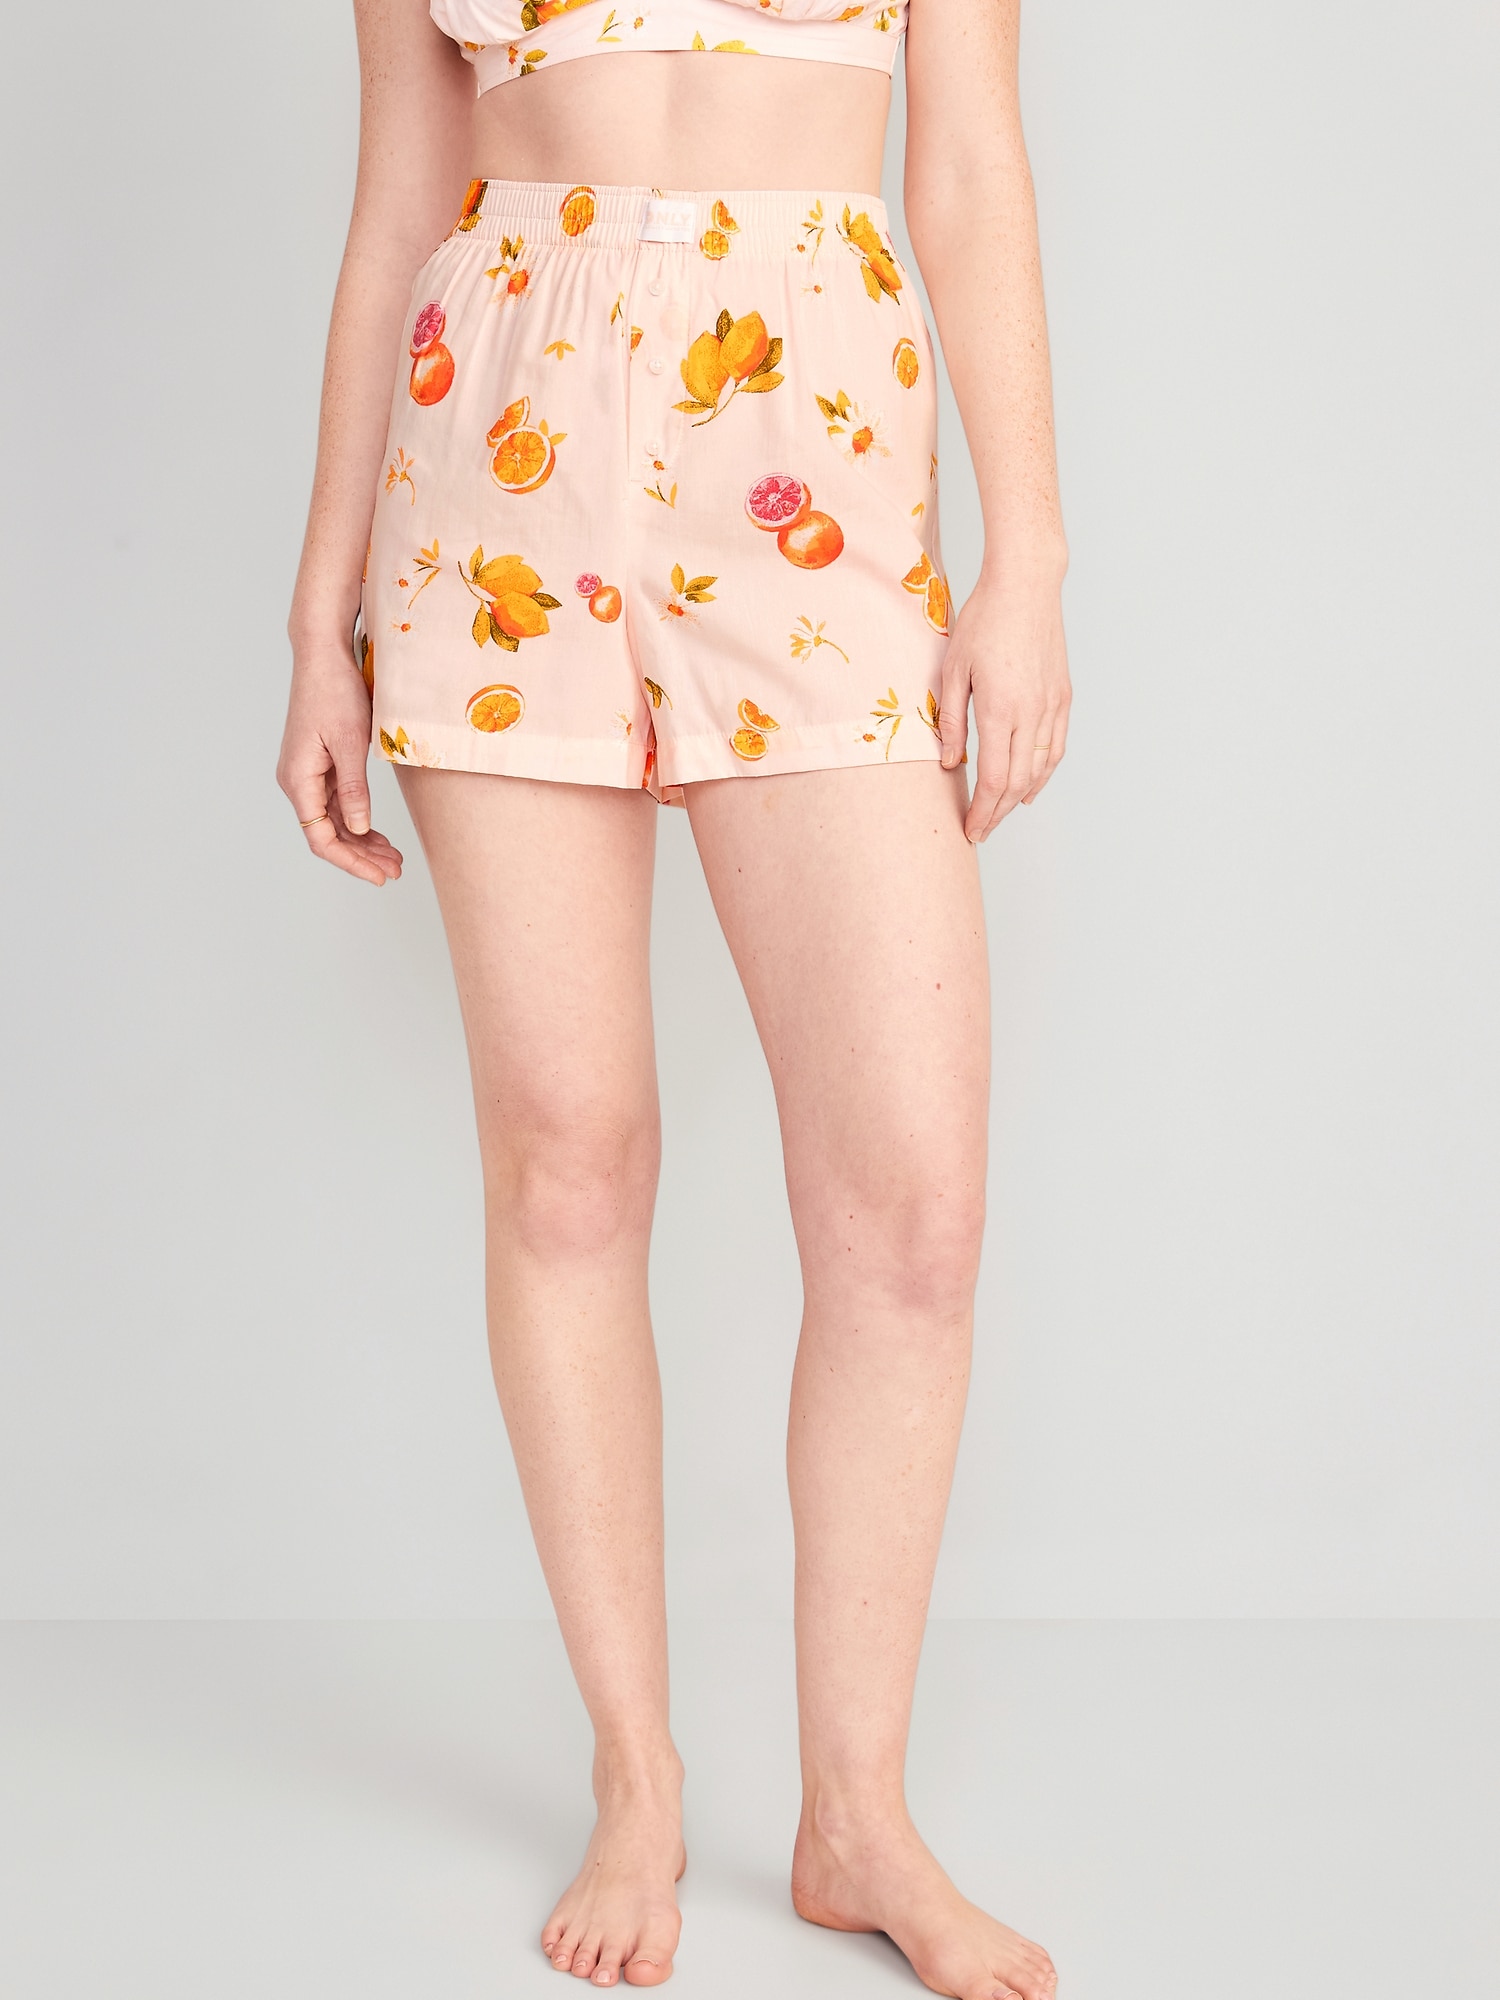 Matching High-Waisted Printed Pajama Boxer Shorts - 3.5-inch